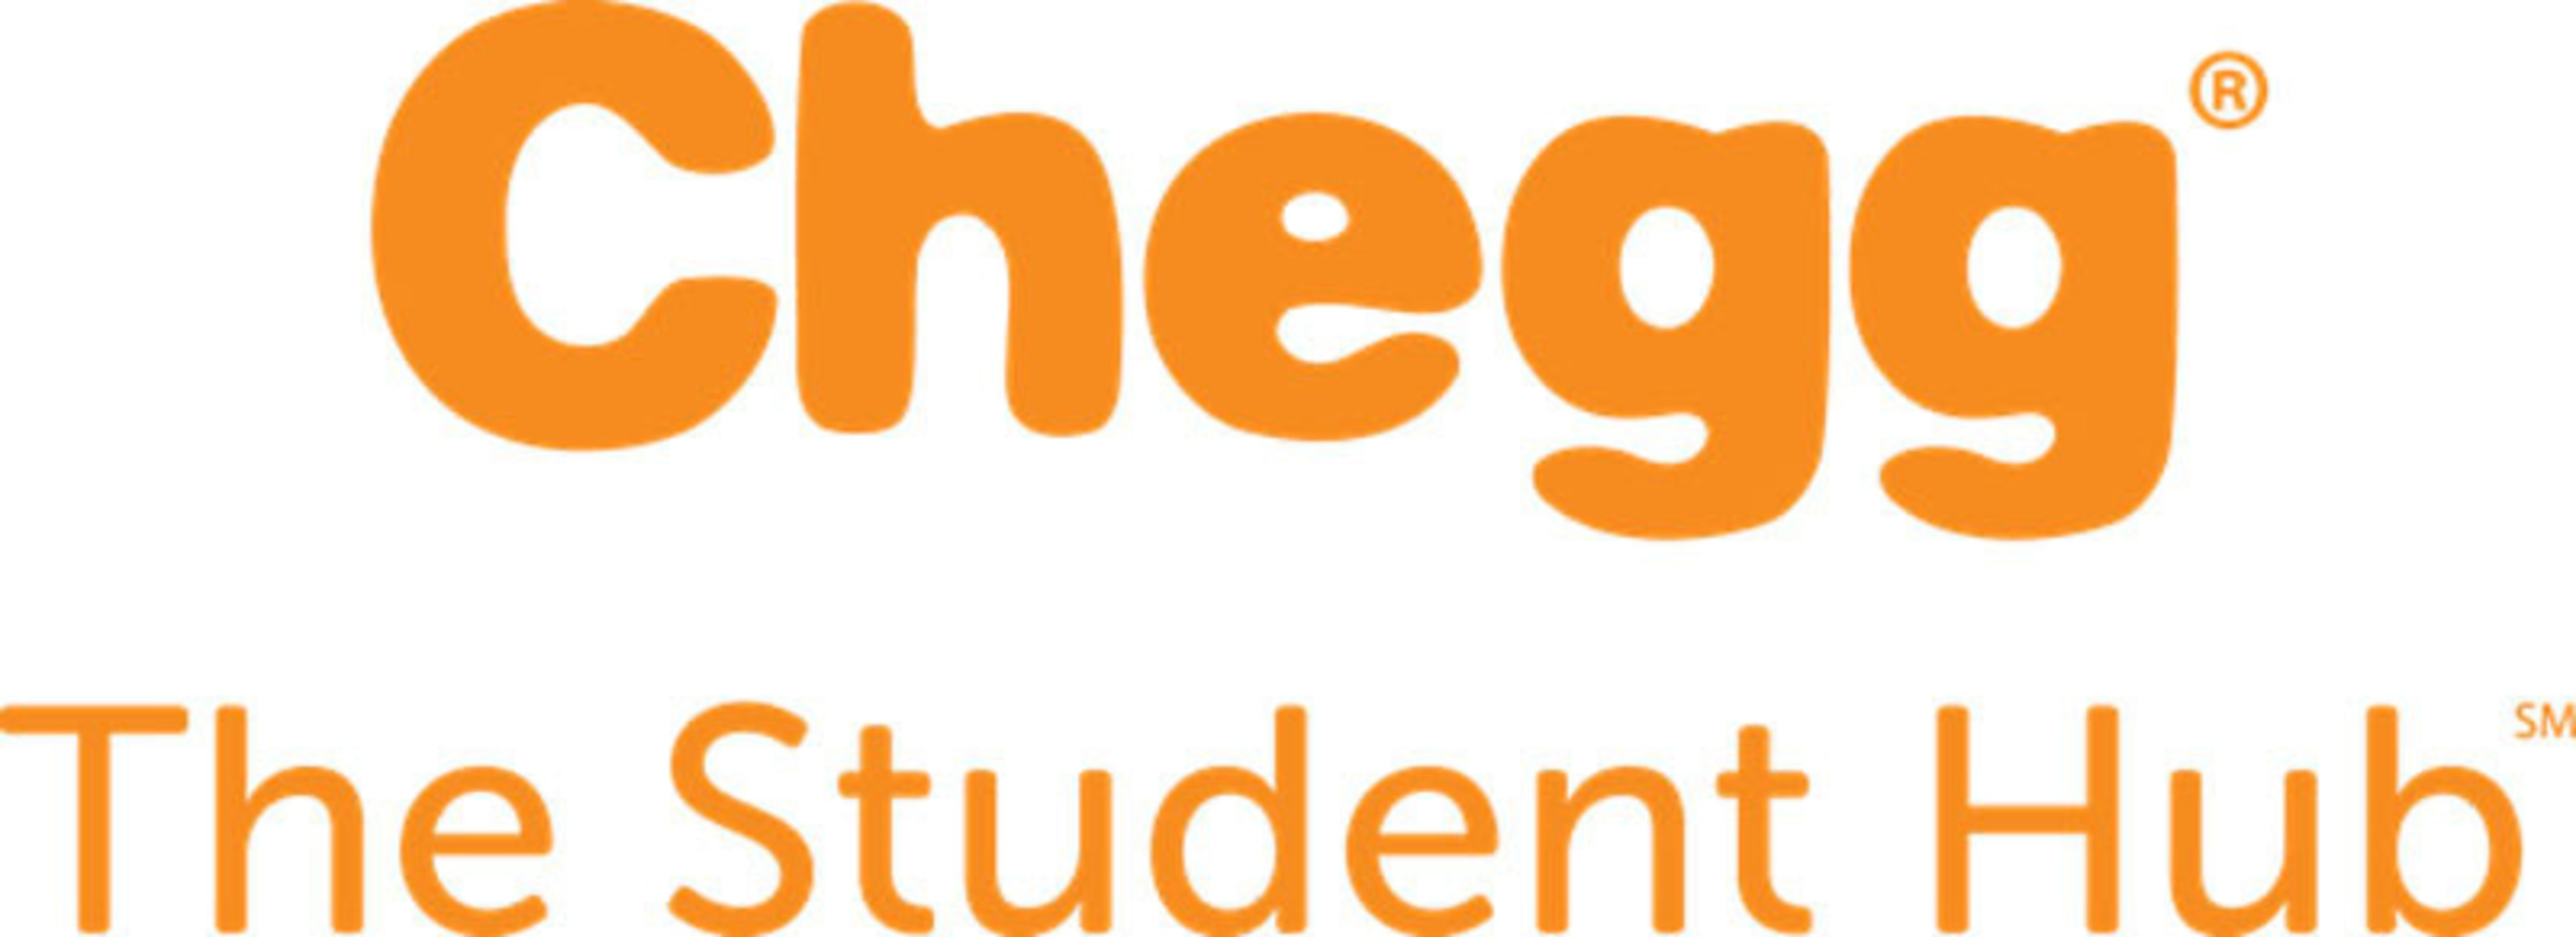 Chegg, The Student Hub. (PRNewsFoto/Chegg Inc.) (PRNewsFoto/CHEGG INC.)